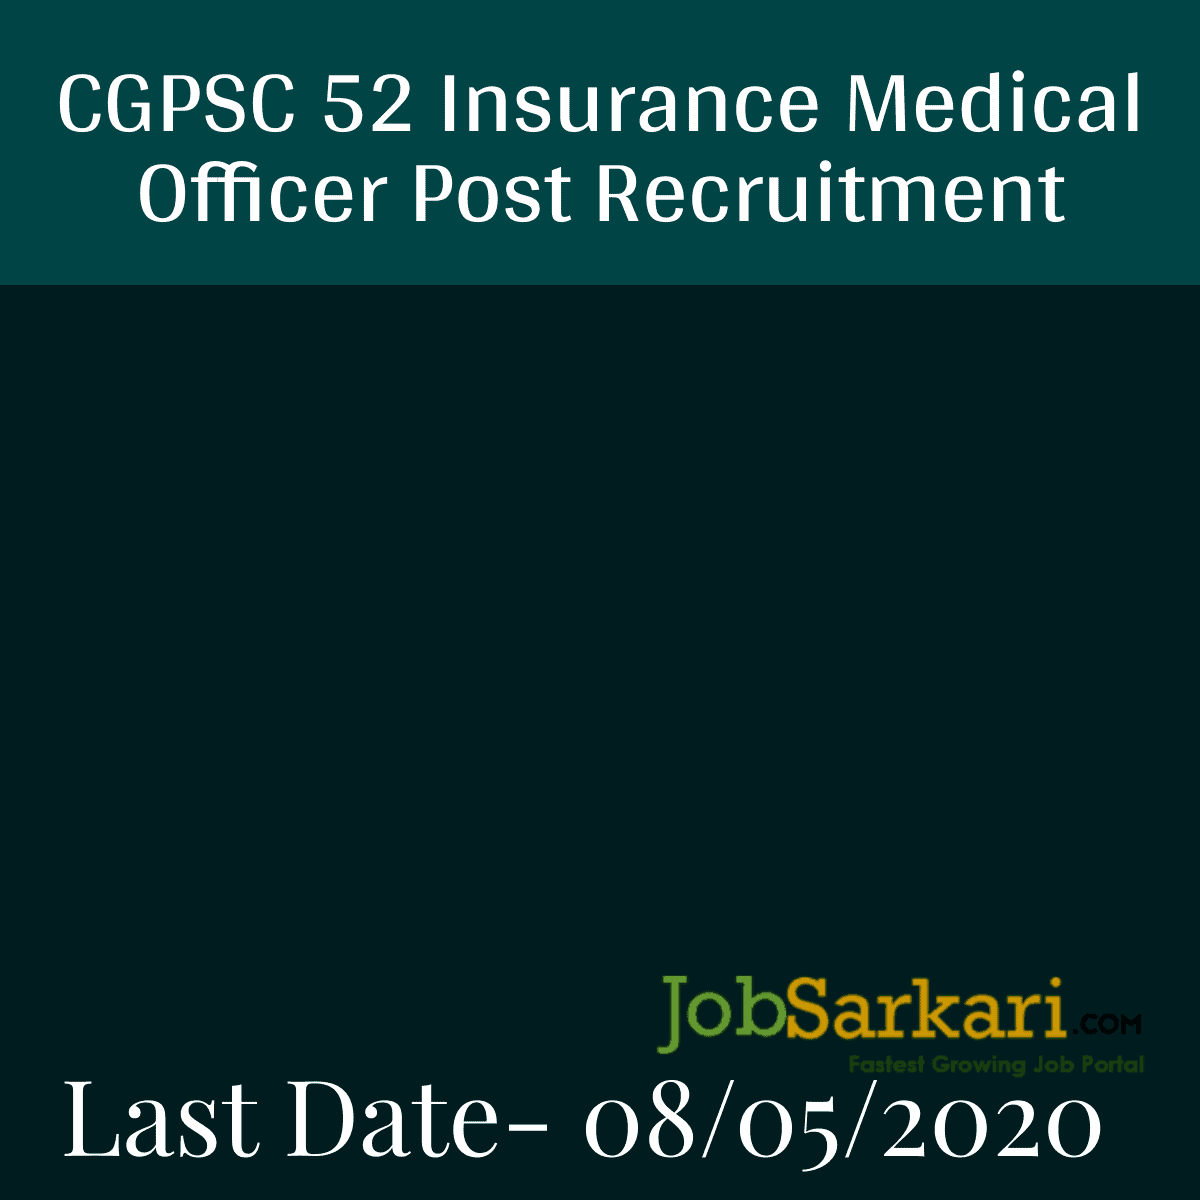 CGPSC Recruitment 2020 for Insurance Medical Officer Post